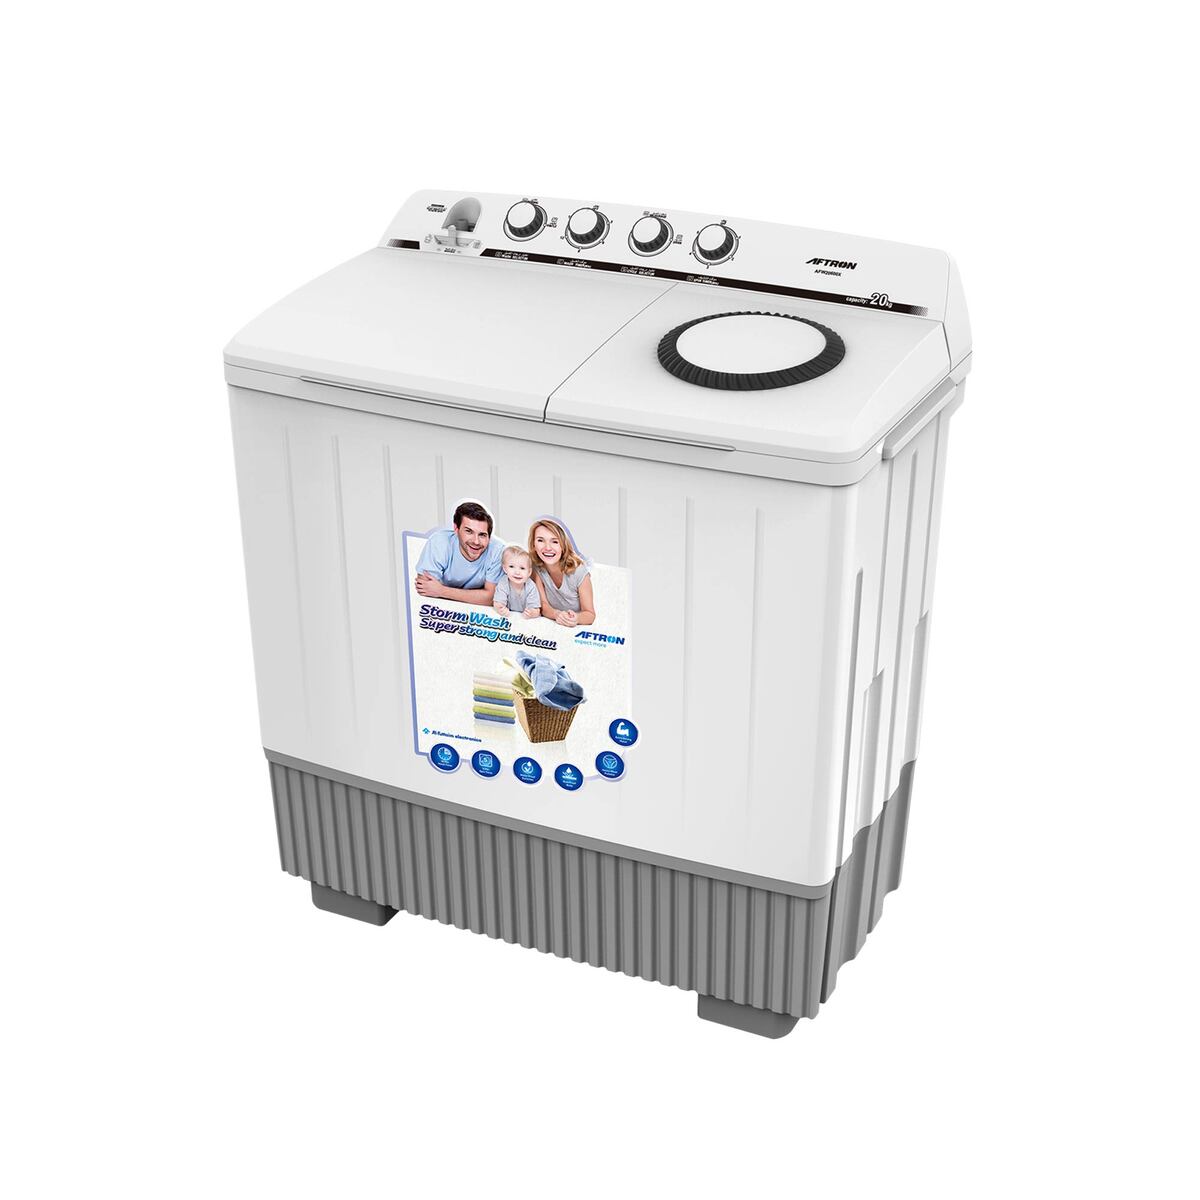 Aftron Twin Tub Top Load Washing Machine AFW20600X, 20Kg